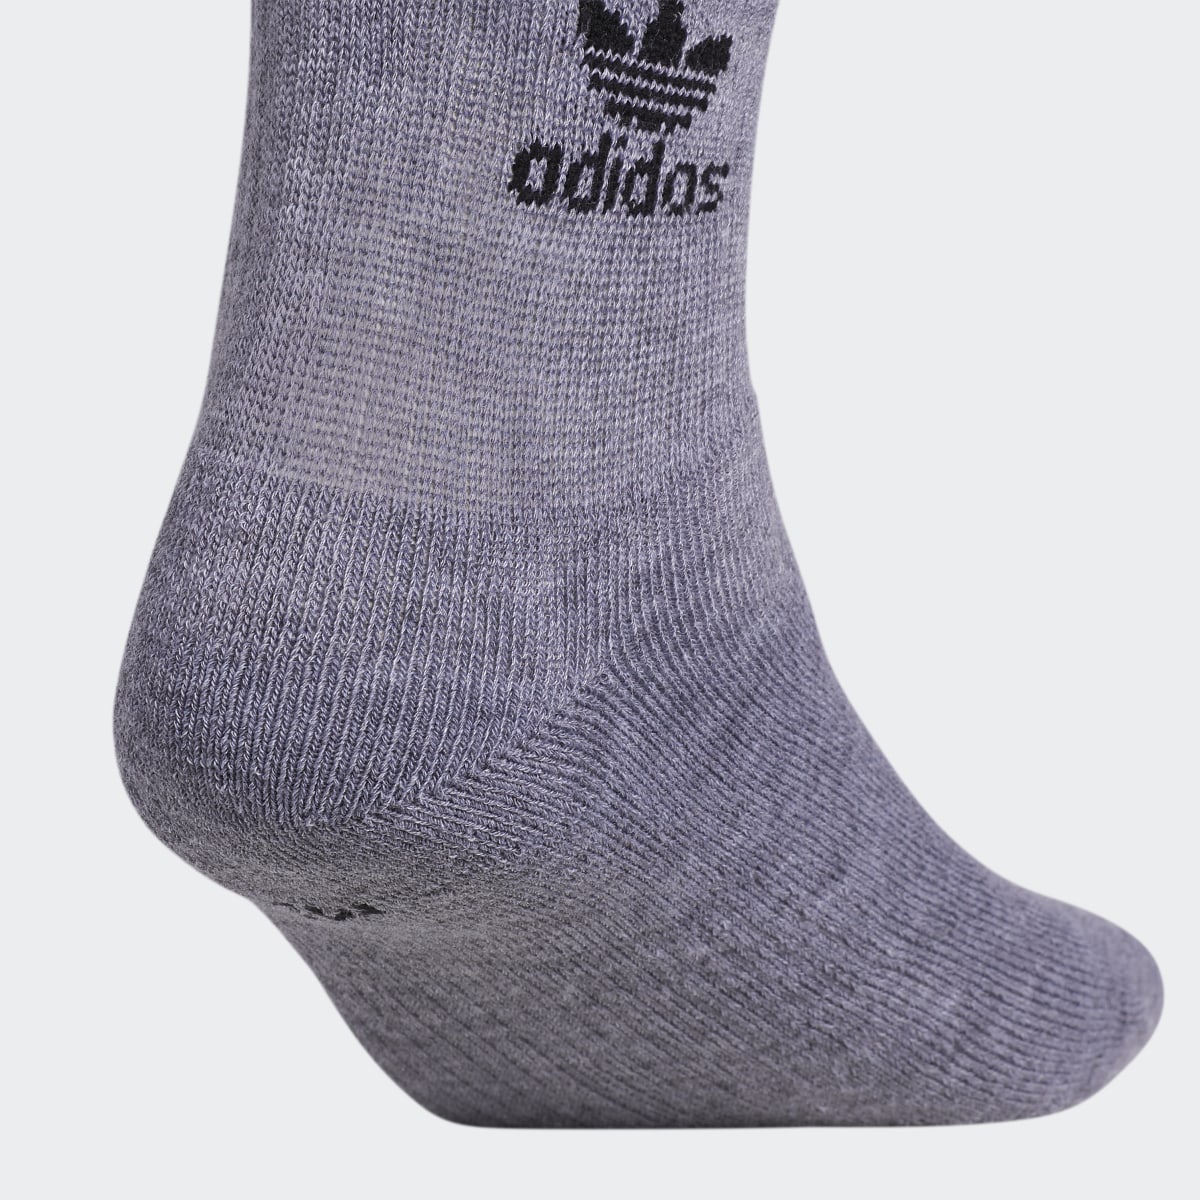 Adidas Trefoil Quarter Socks 6 Pairs. 5